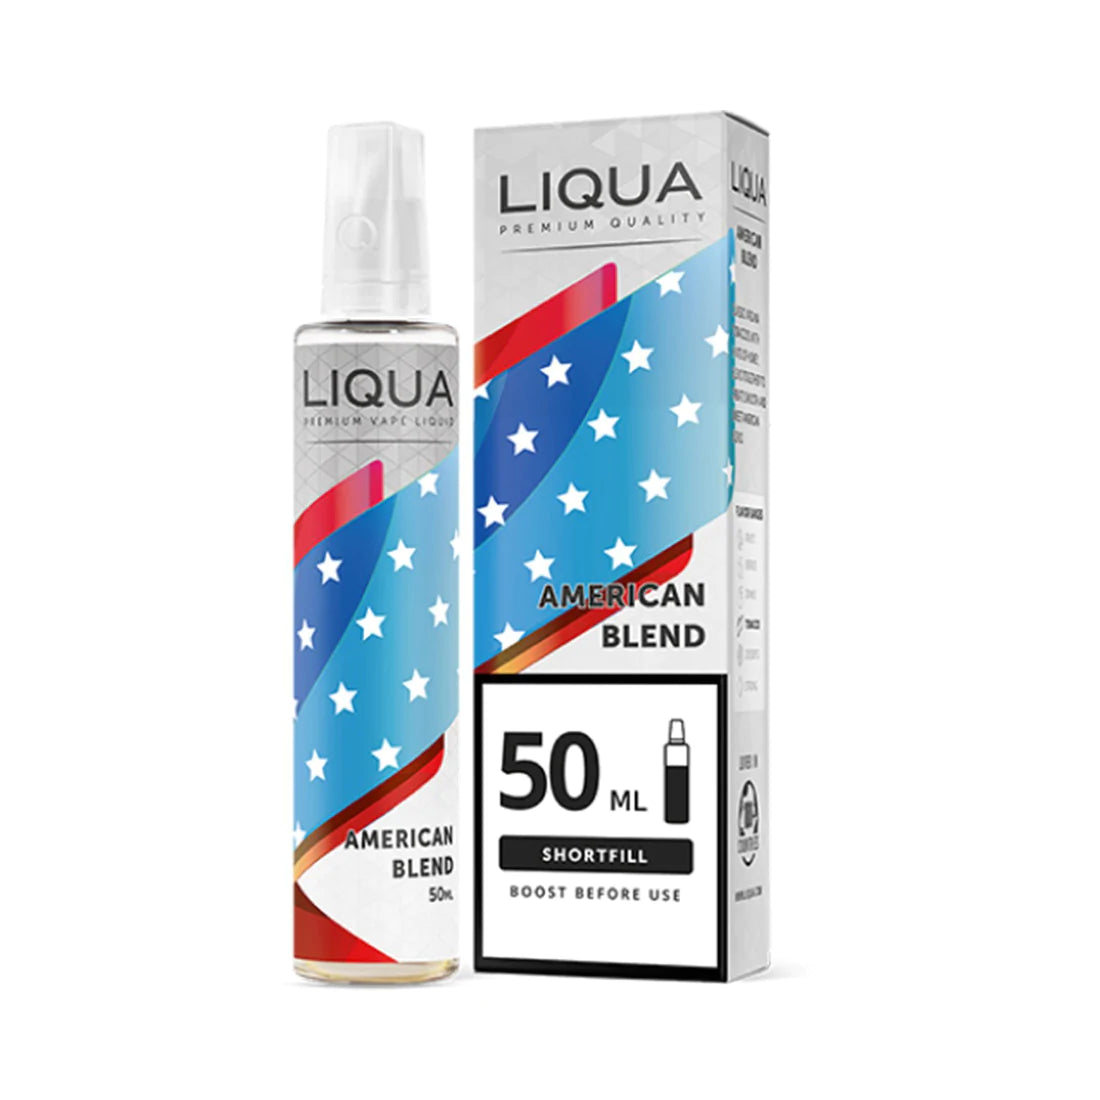 Liqua - American Blend 50ml - OB Vape Shop Ireland | Free Next Day Delivery Over €50 | OB Vape Ireland's Premier Vape Shop | OB Bar Disposable Vape